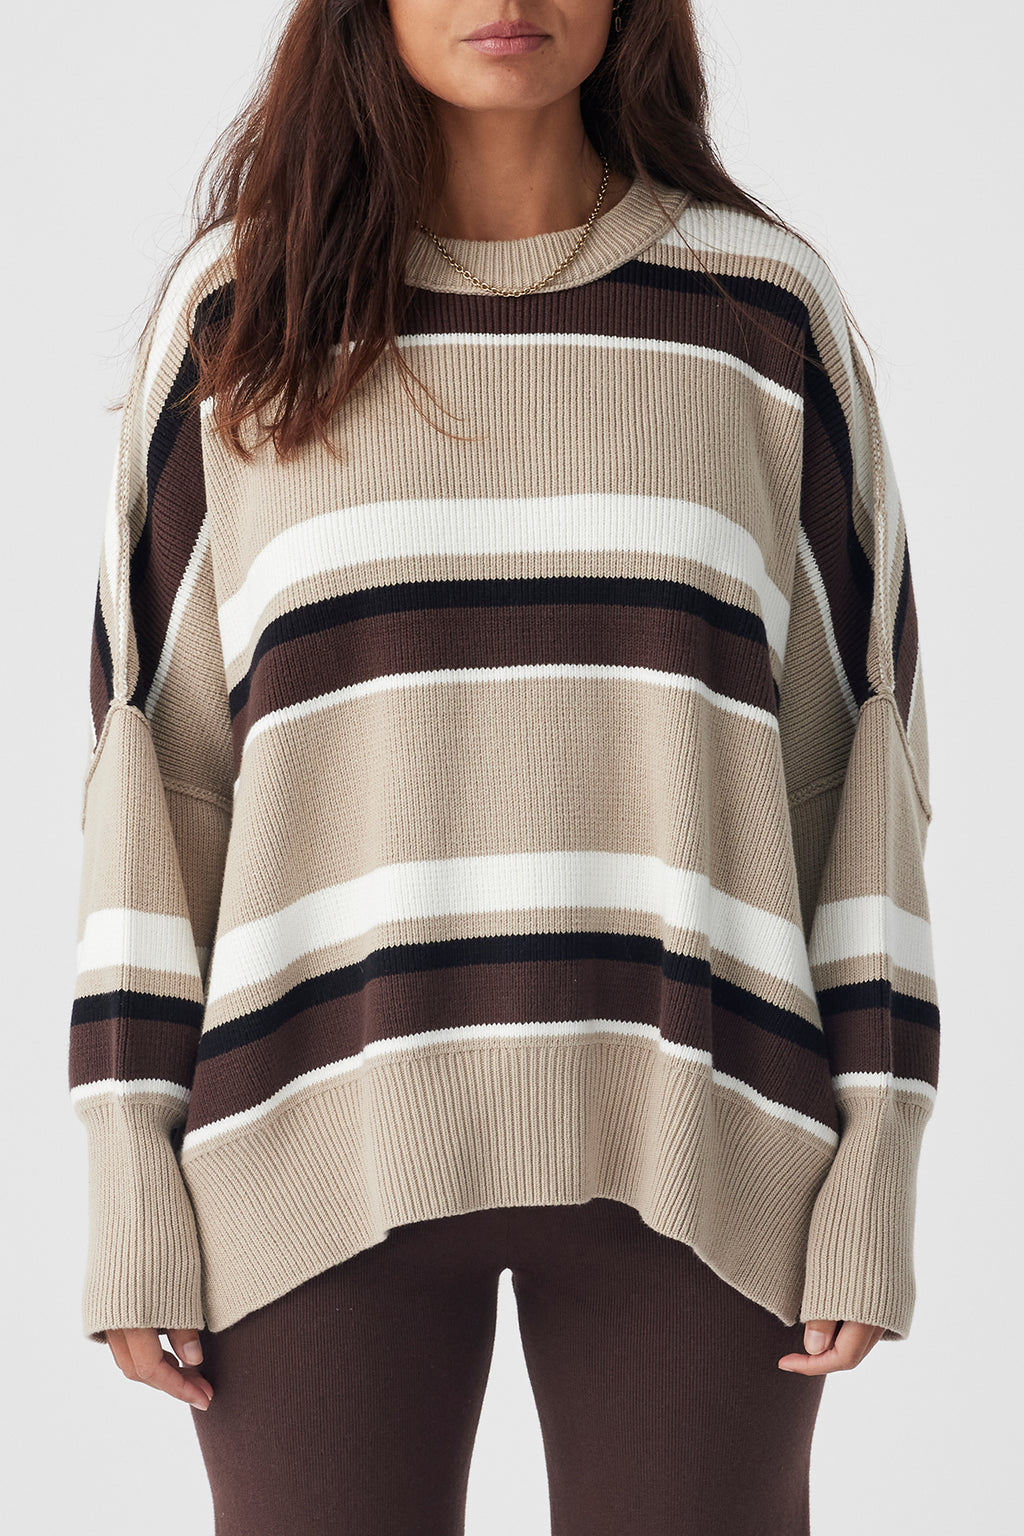 Harper Stripe Organic Knit Sweater - Taupe, Chocolate, Cream & Black